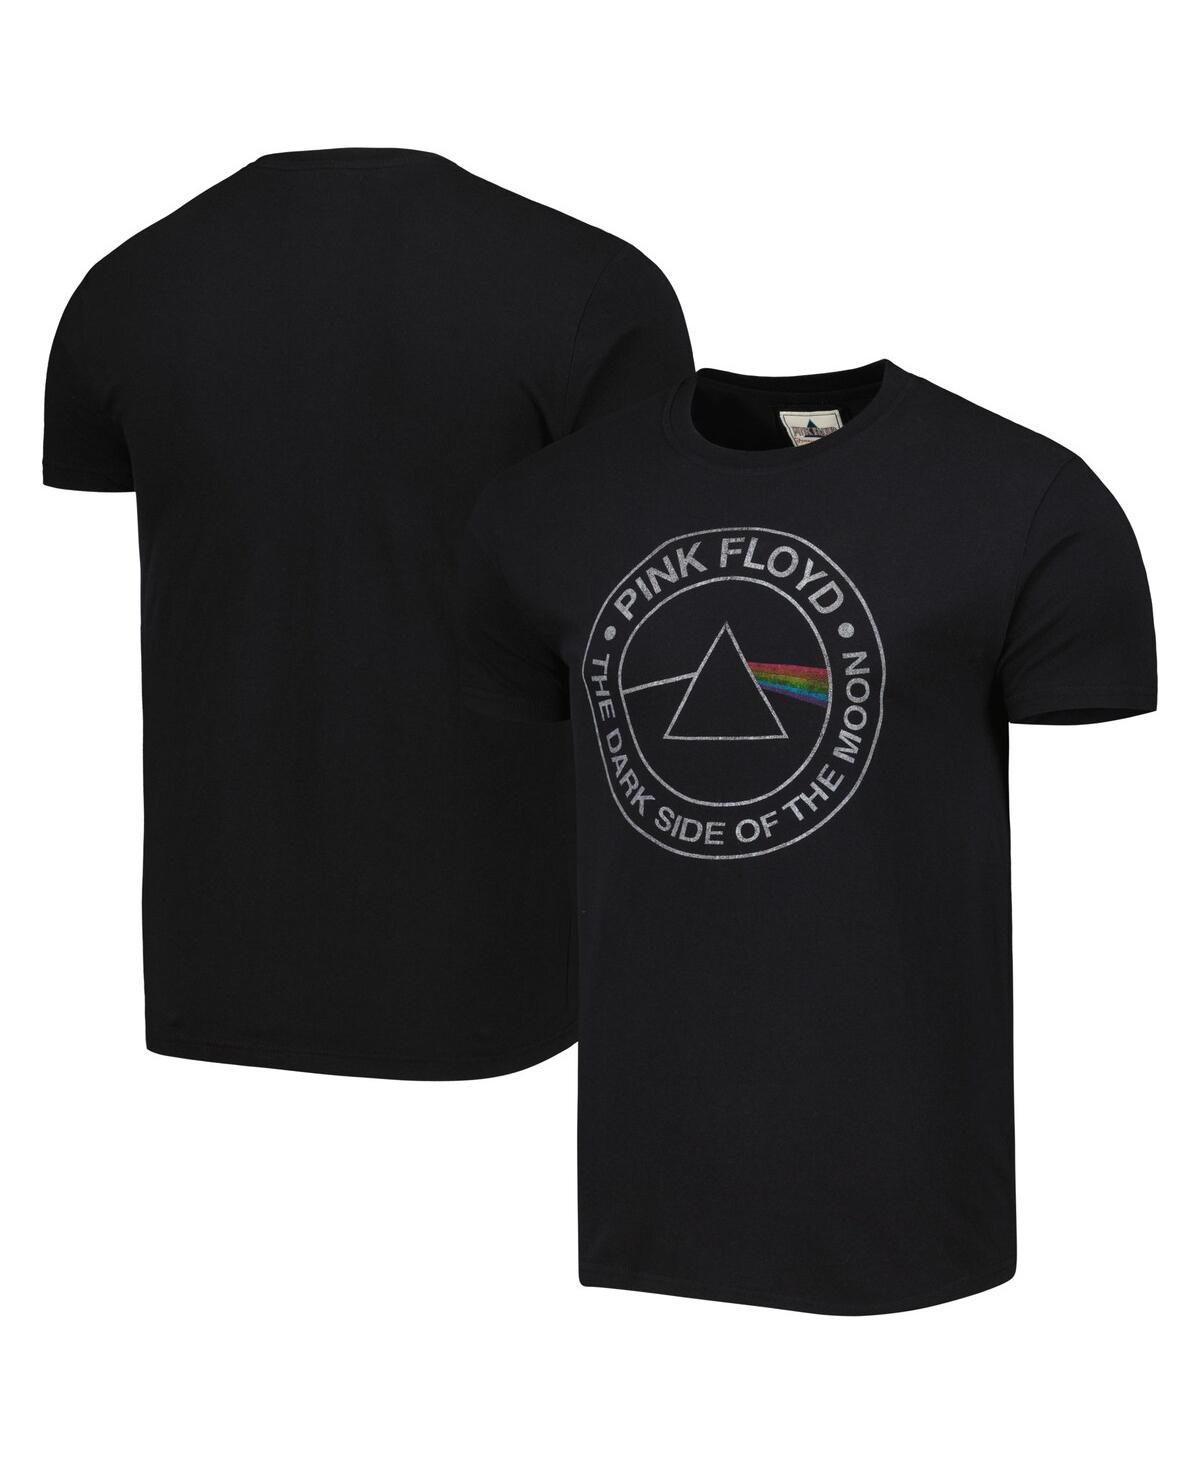 Shop American Needle Men's And Women's  Black Pink Floyd Brass Tacks T-shirt